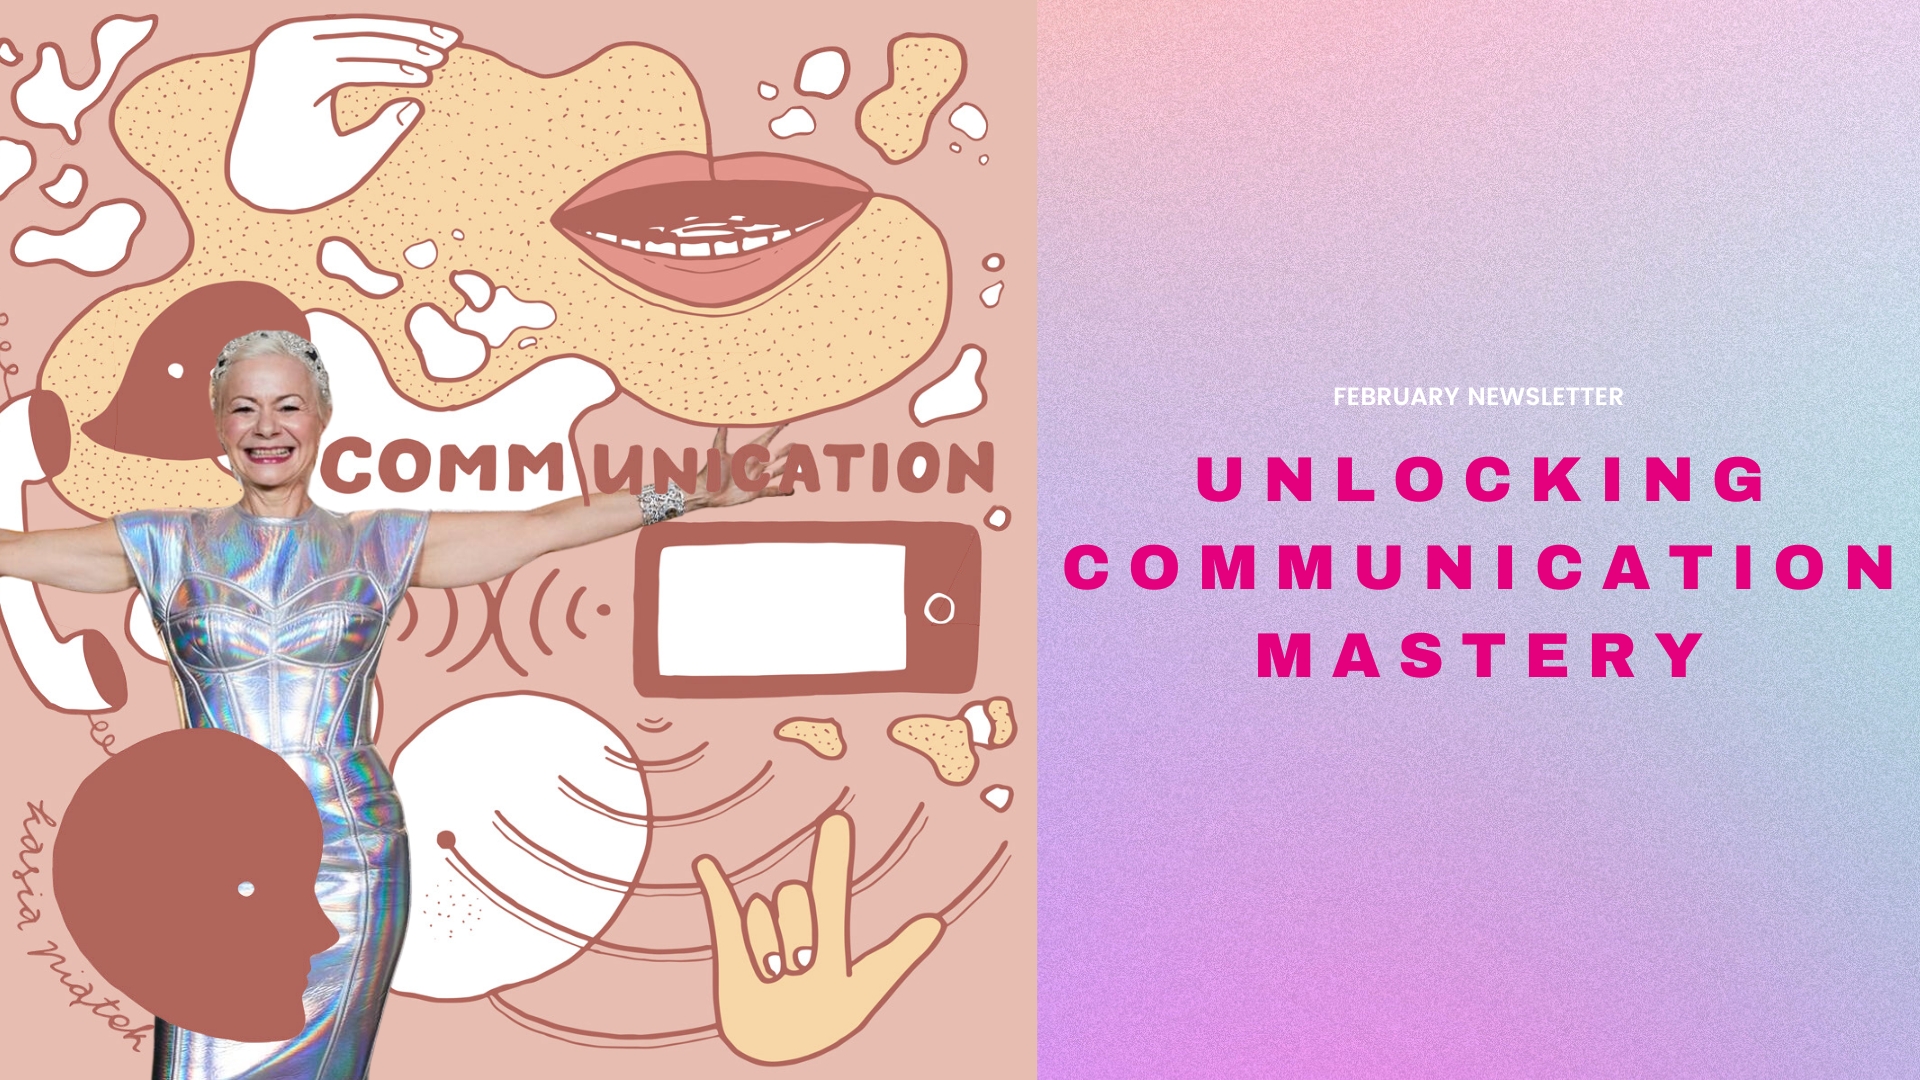 Unlocking communication mastery